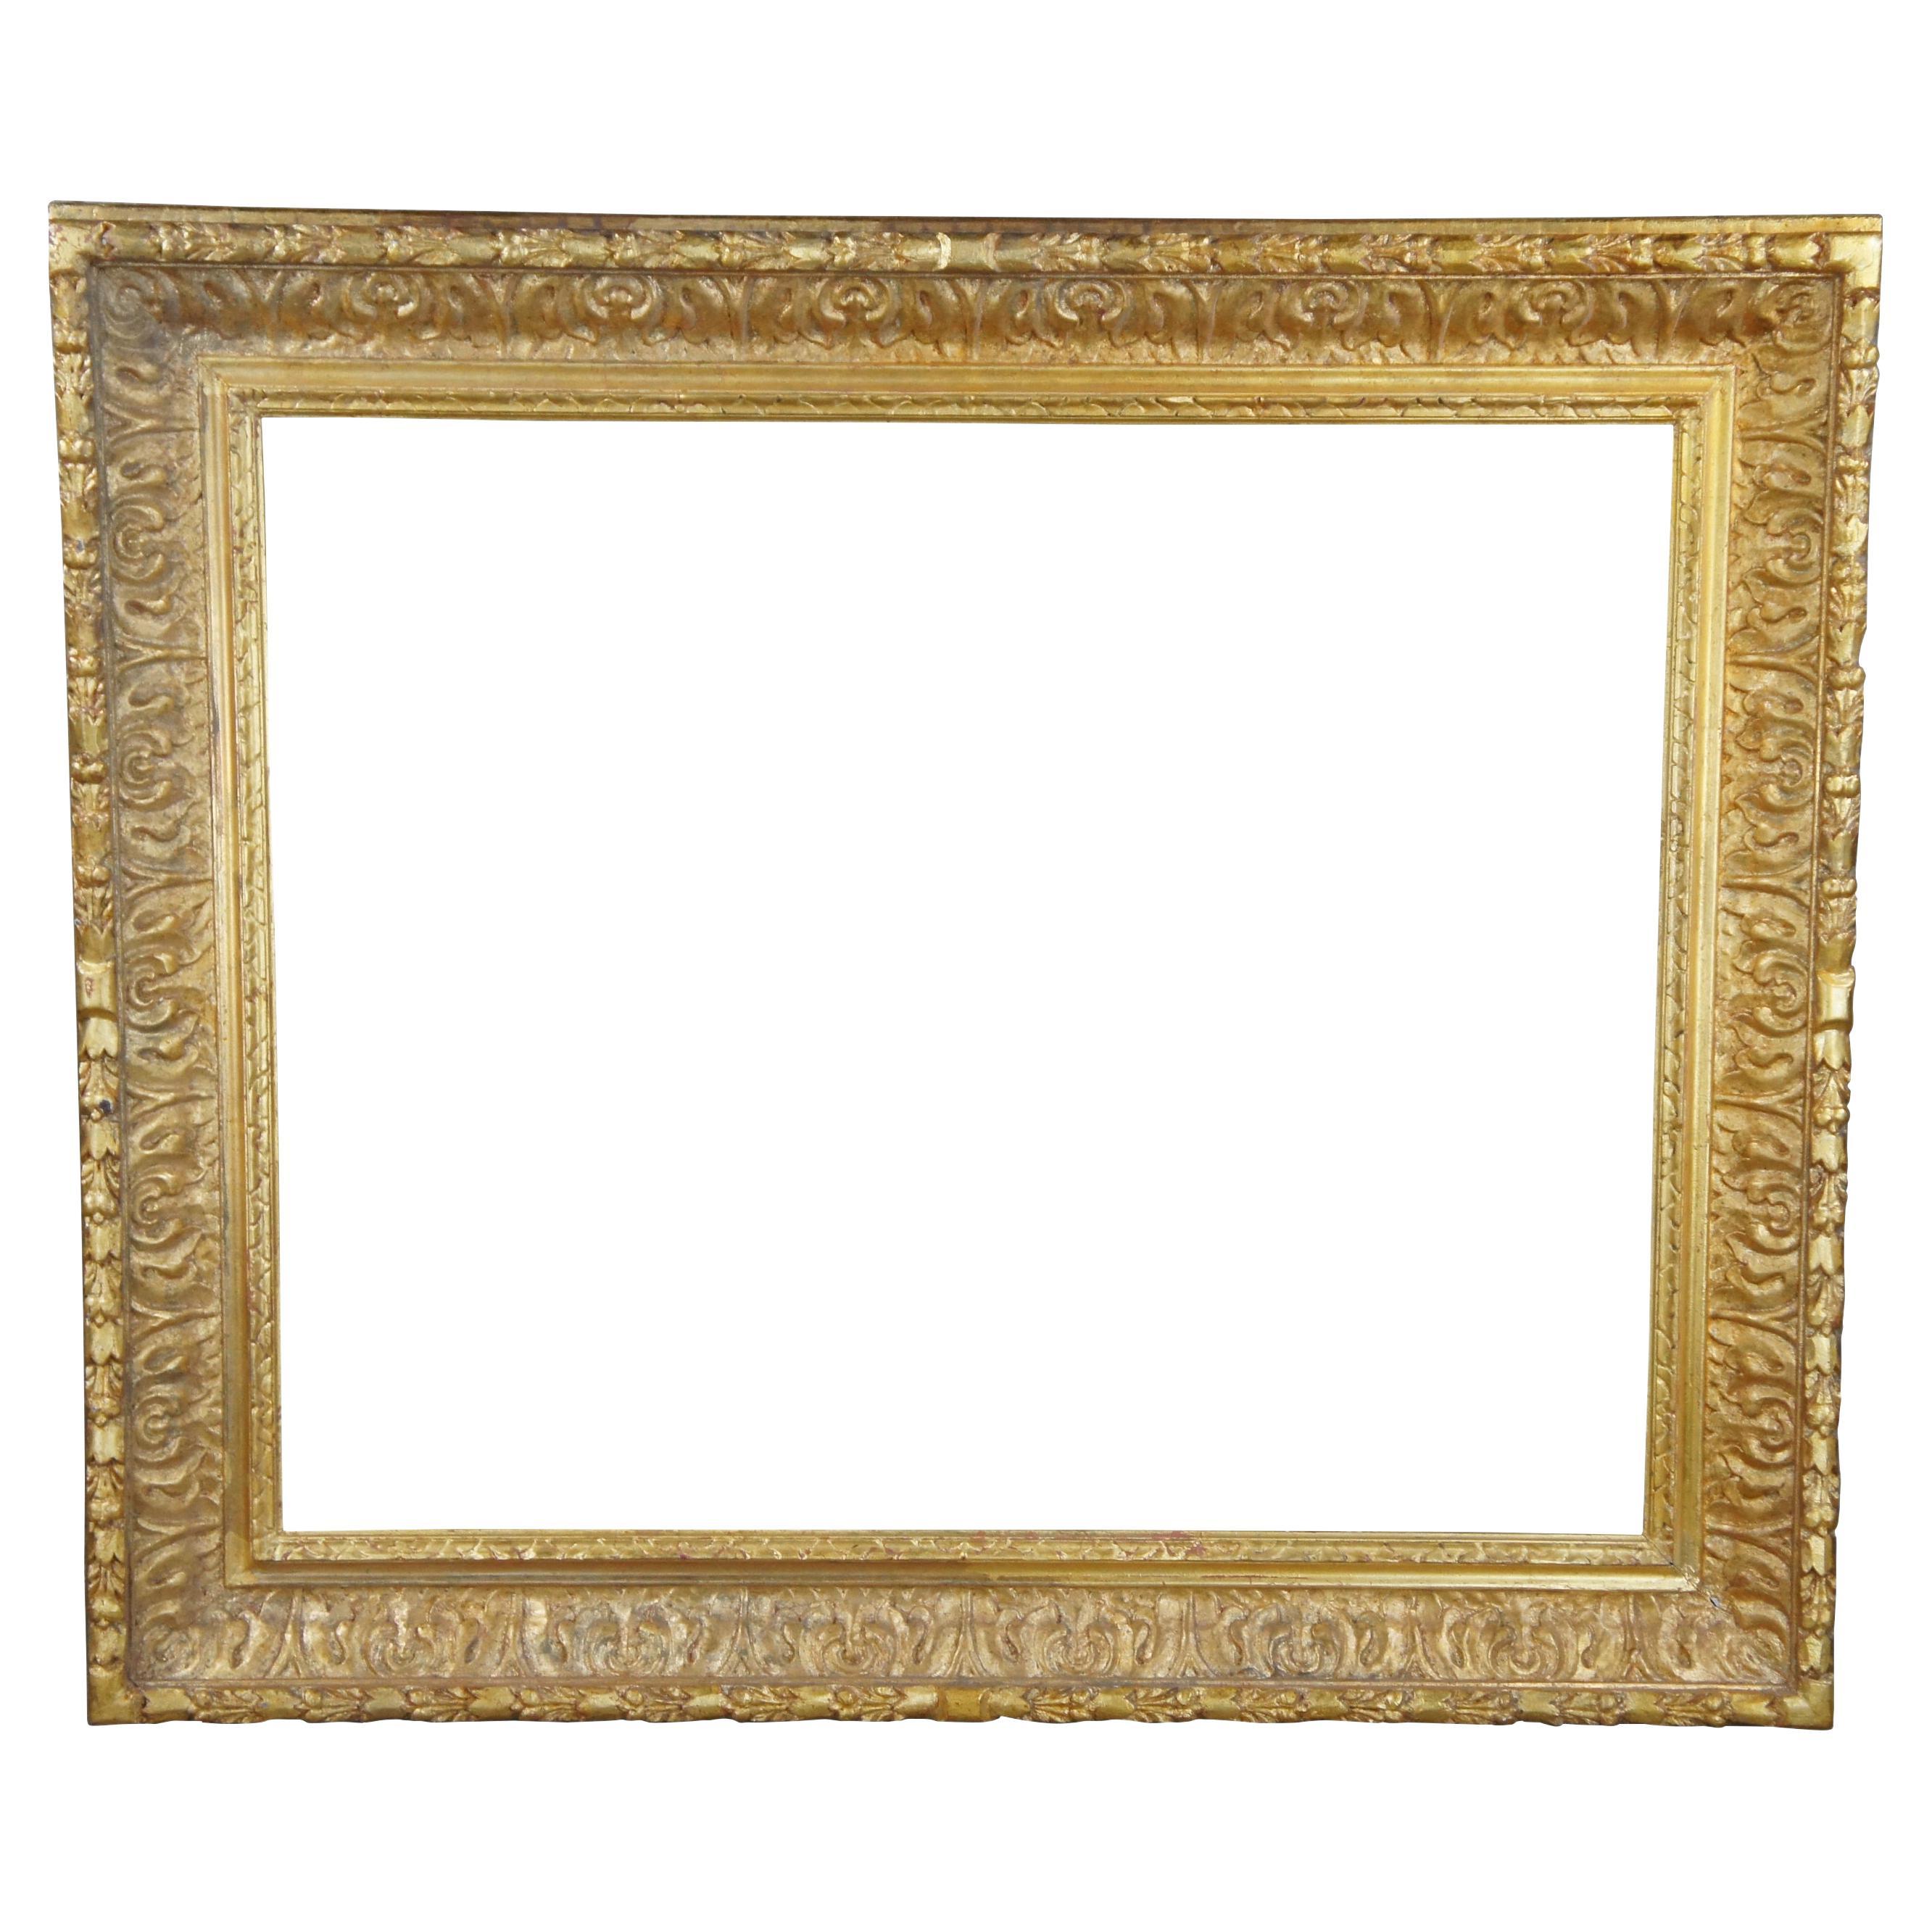 Large Impressive Antique Carved Gold Gilded Picture Art Mirror Frame 53"